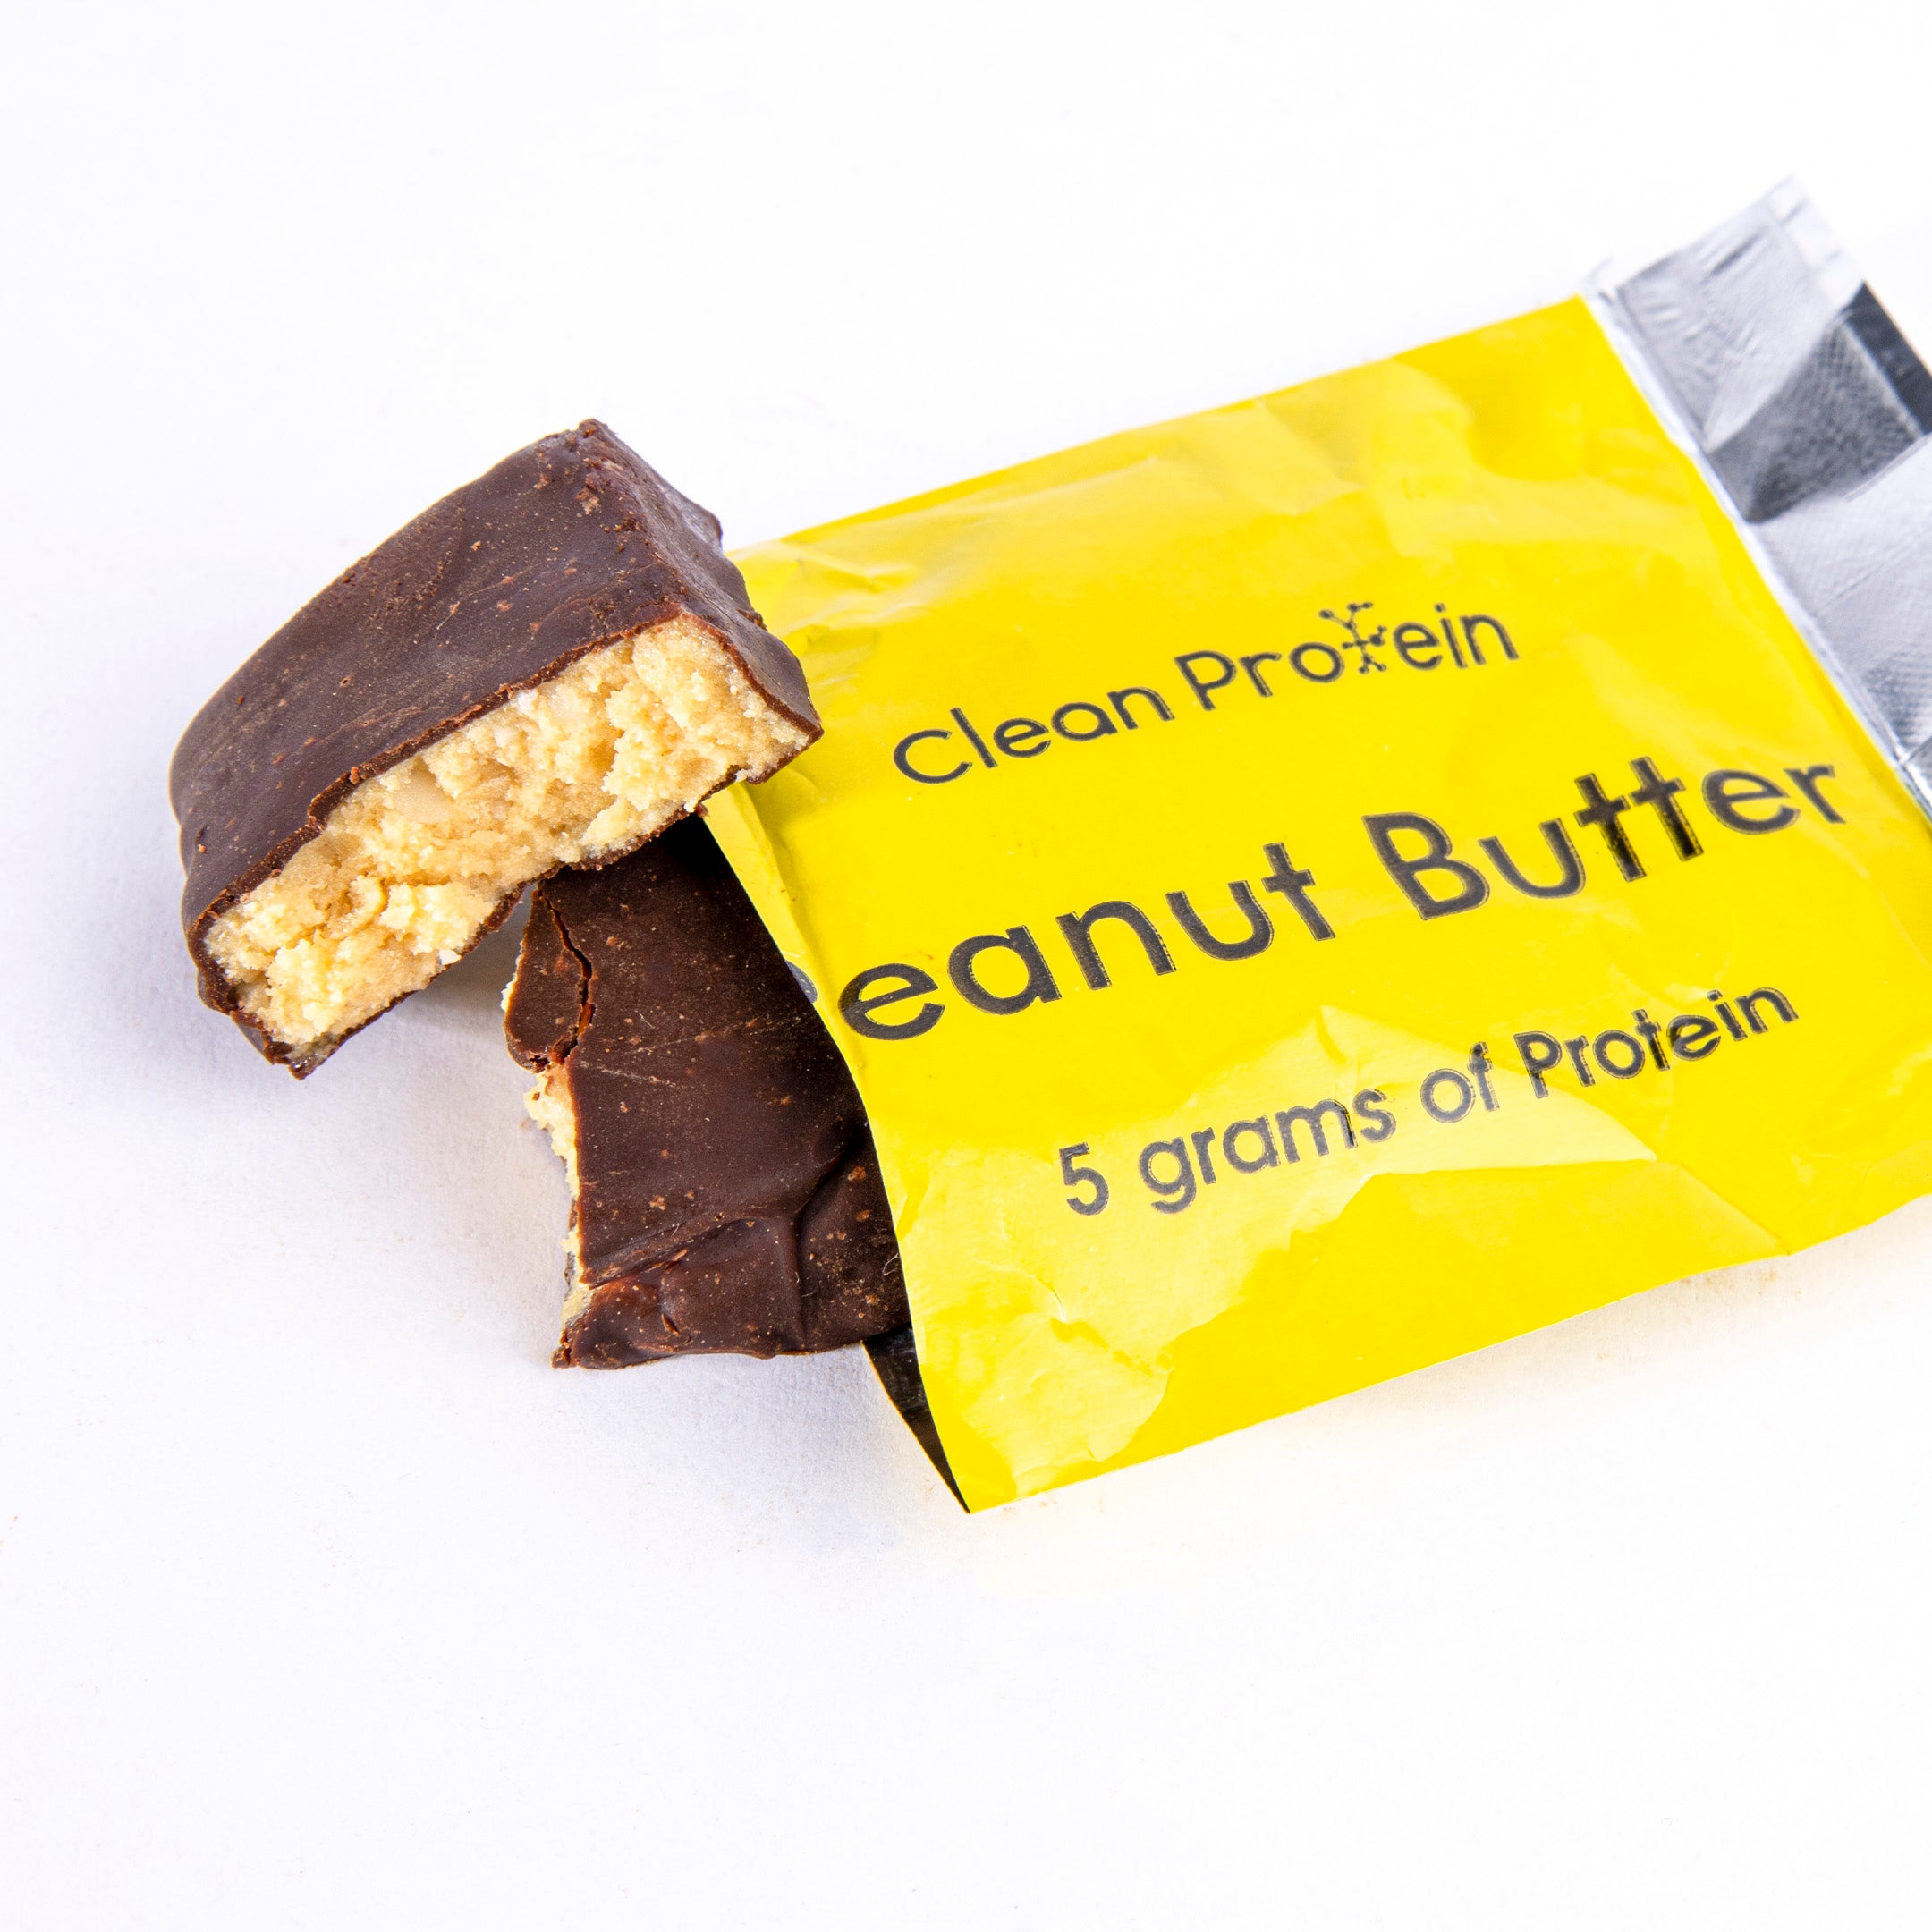 Clean Protein - Peanut Butter